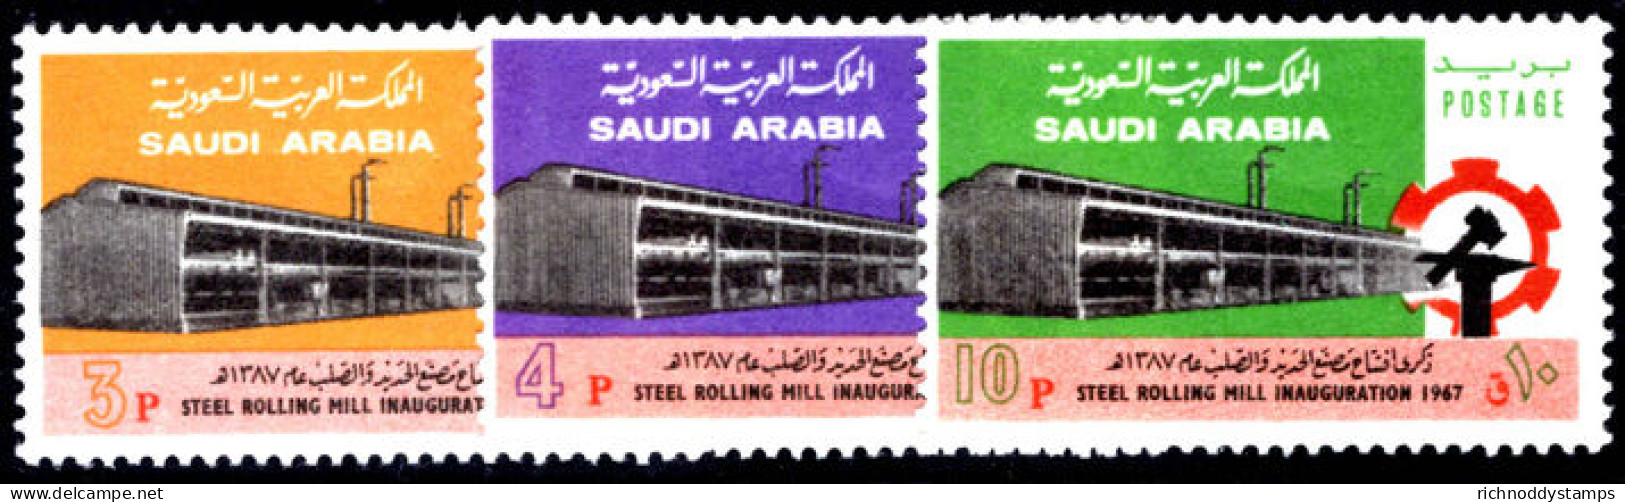 Saudi Arabia 1970 Inauguration (1967) Of First Saudi Arabian Steel Rolling Mill Unmounted Mint. - Arabie Saoudite